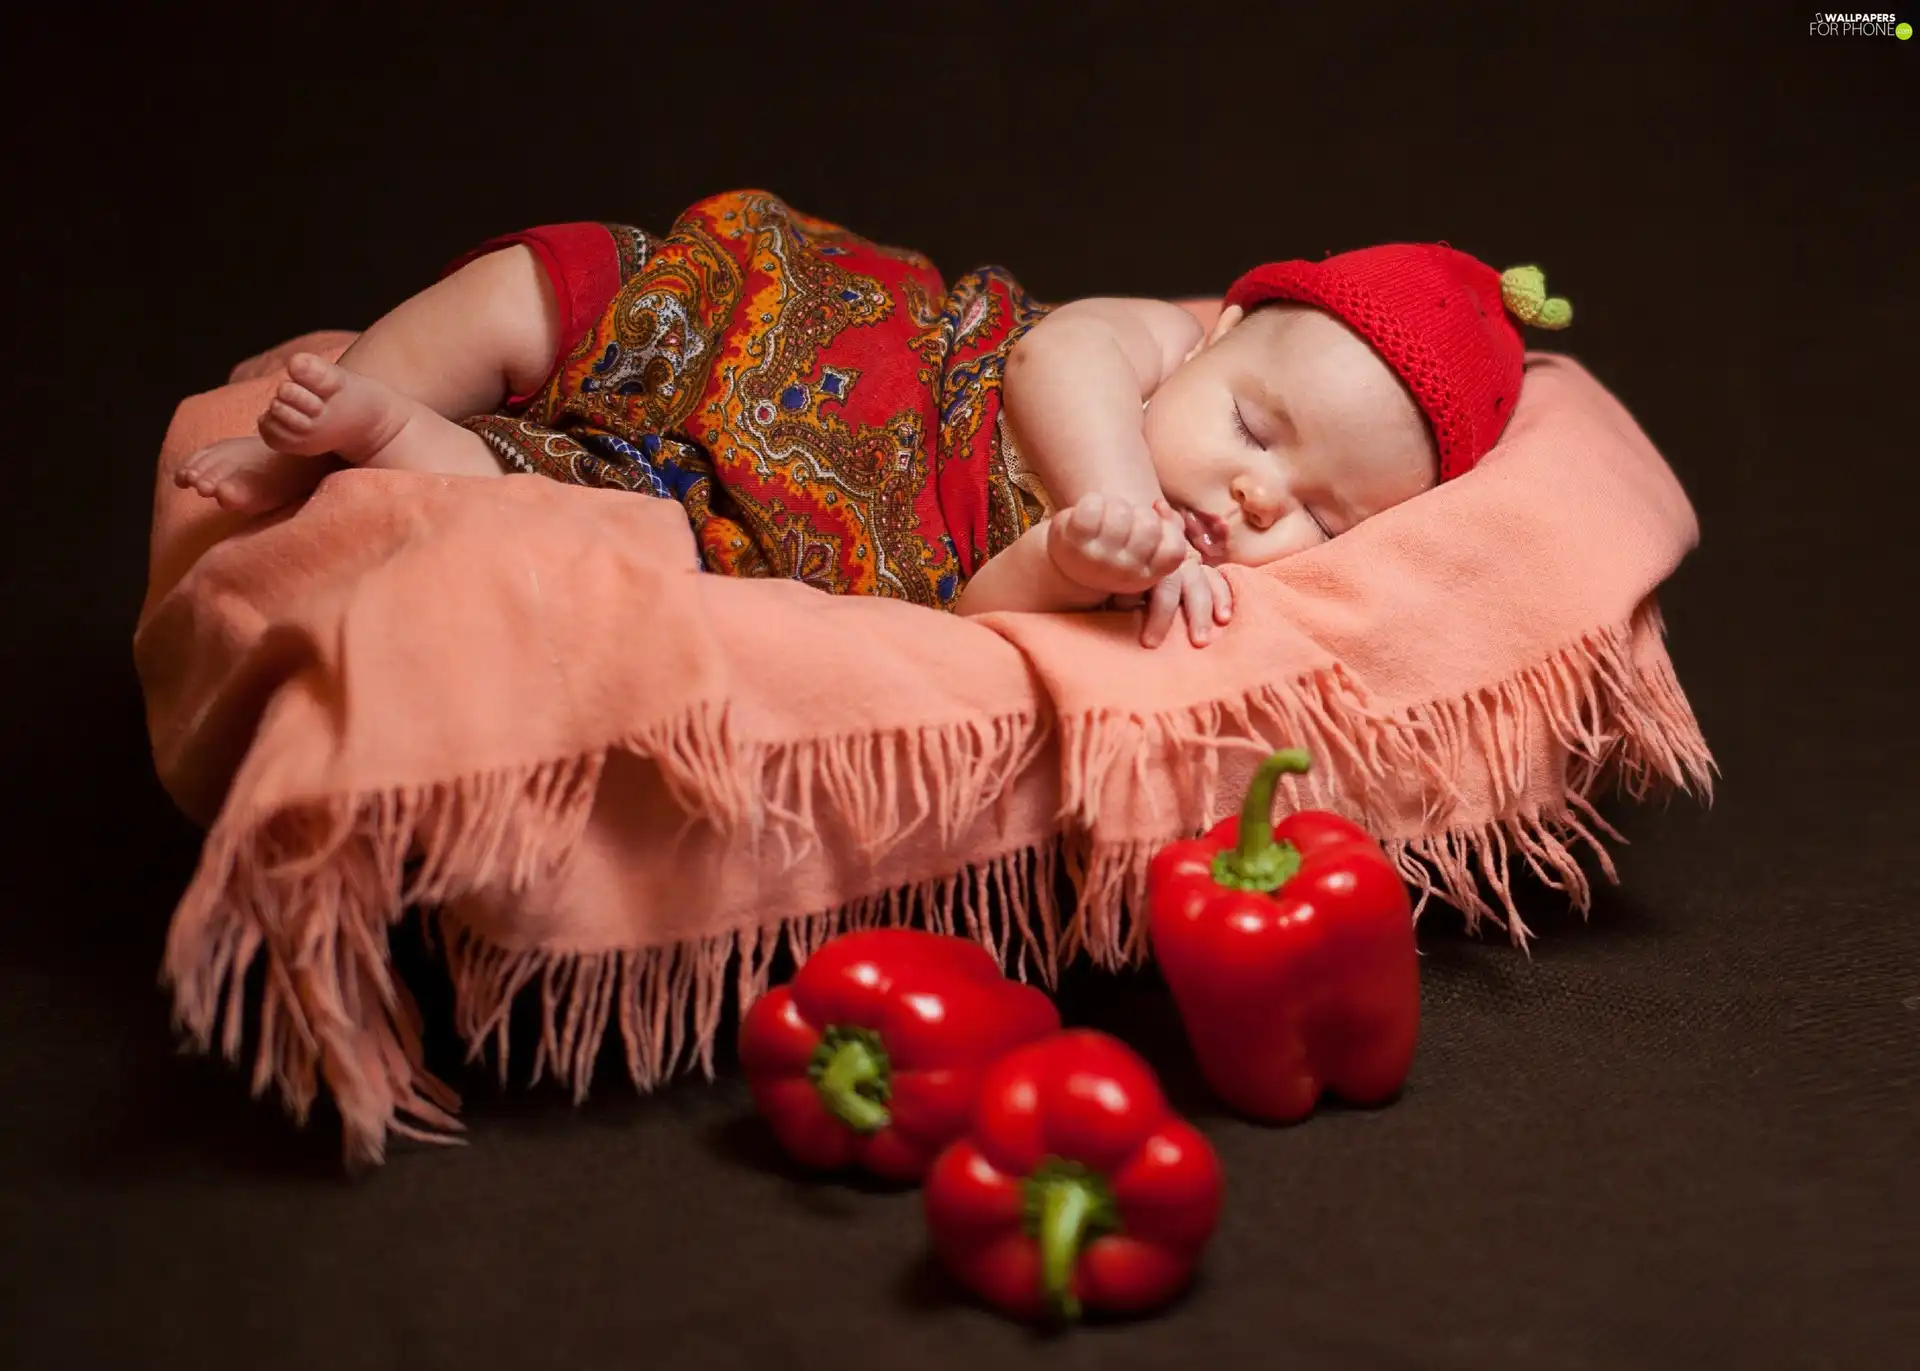 pepper, Sleeping, Baby